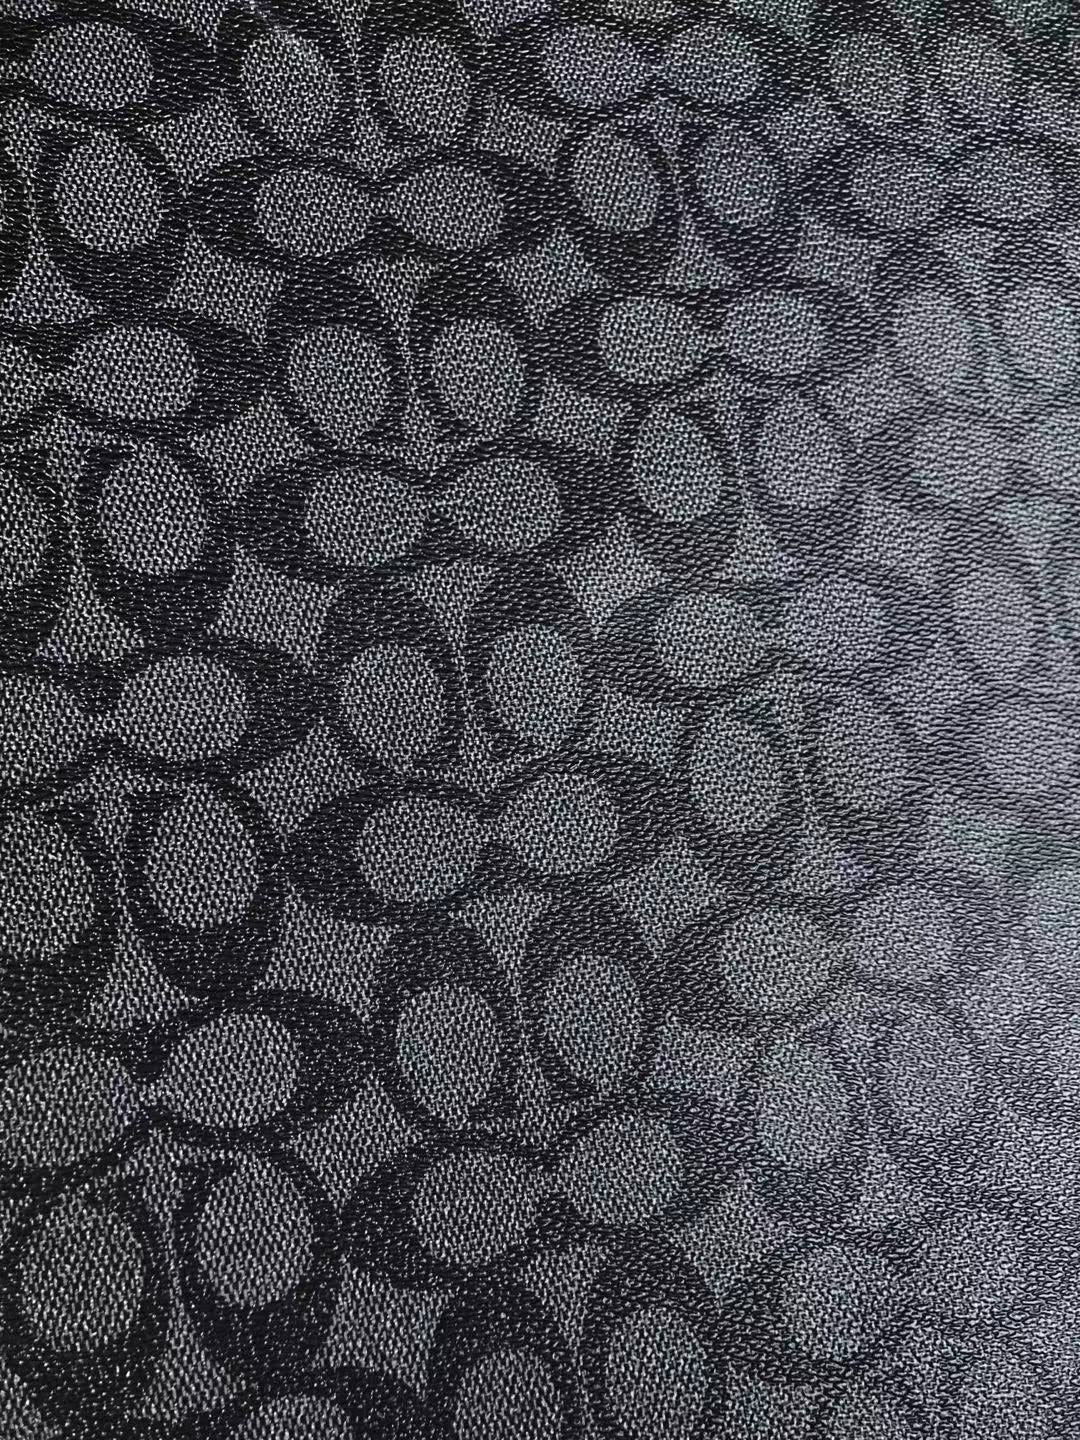 Black Coach Vinyl Leather for Bag Material Custom Shoes – MingFabricStore